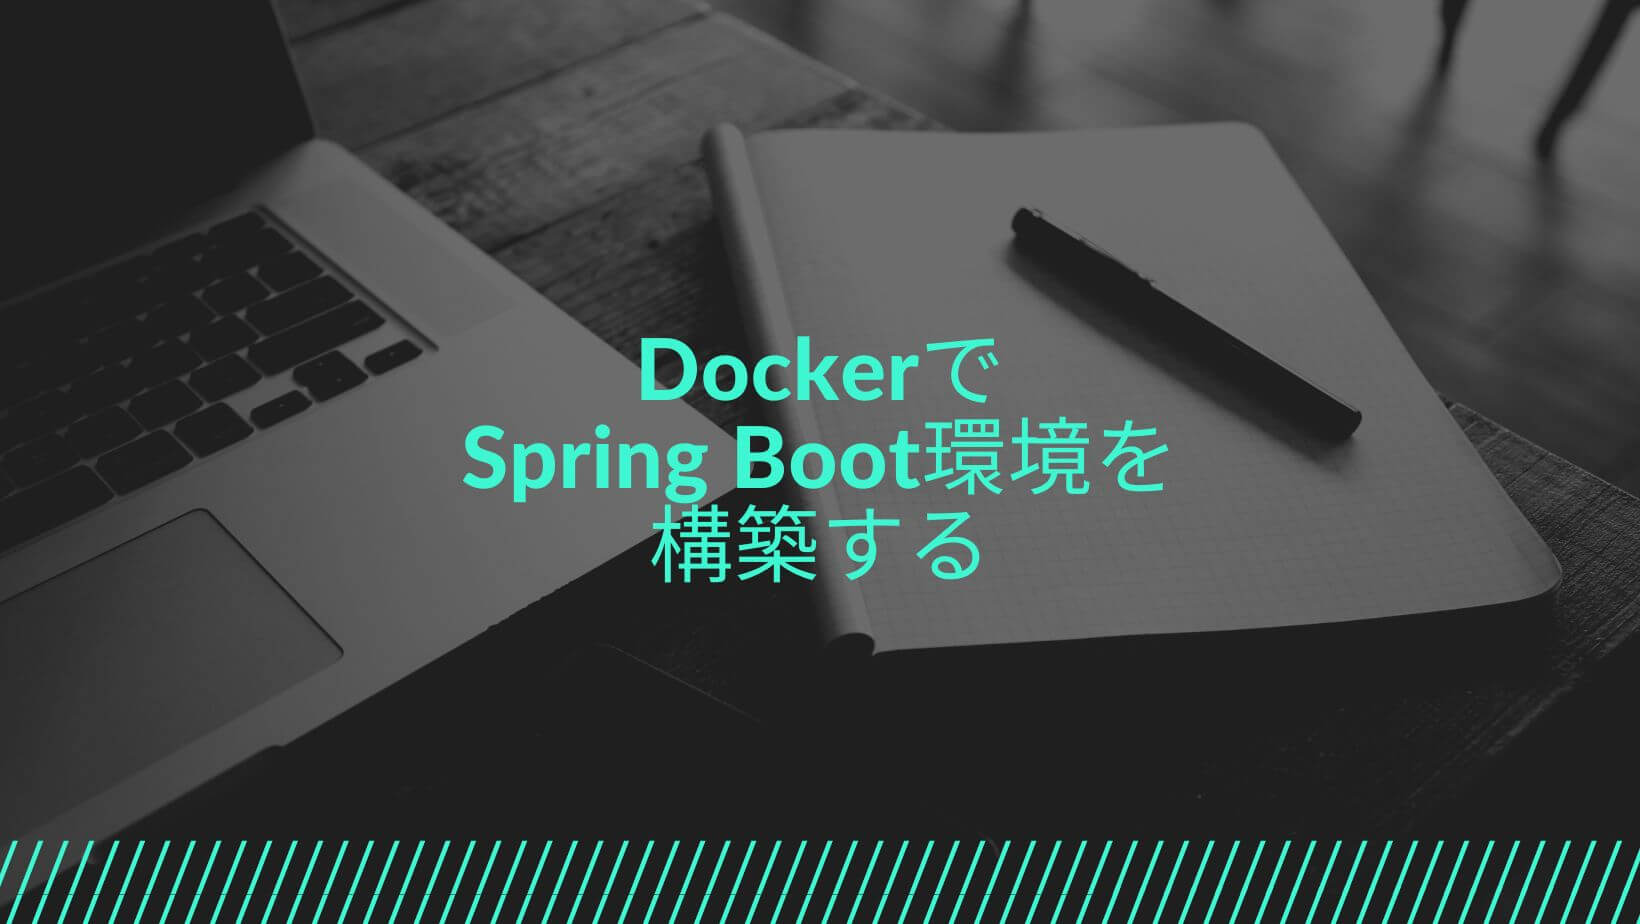 DockerでSpring Boot環境を構築する